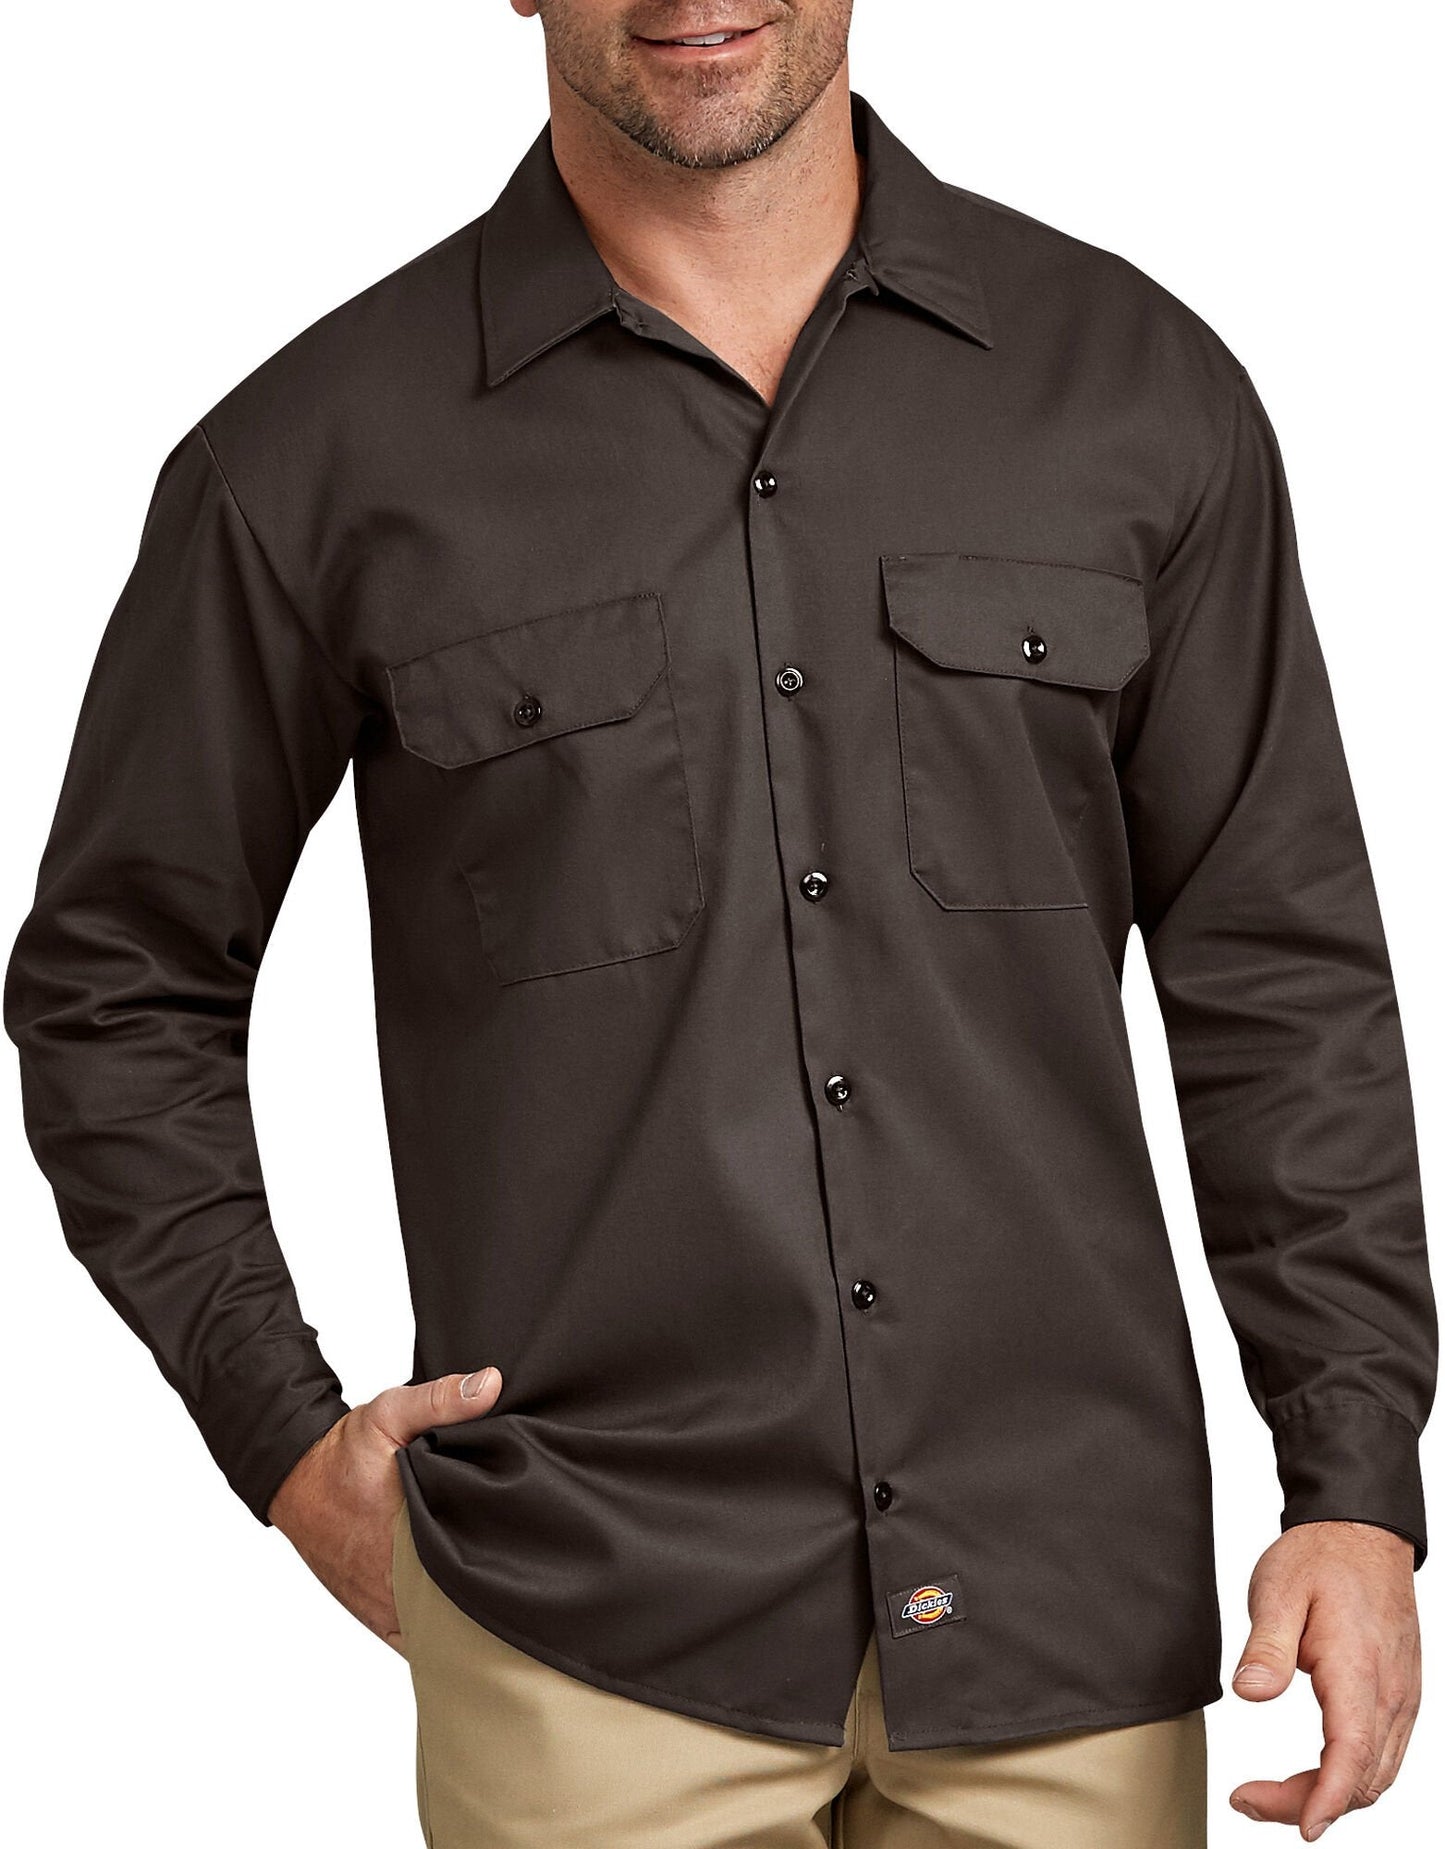 Long Sleeve Work Shirt, Dark Brown